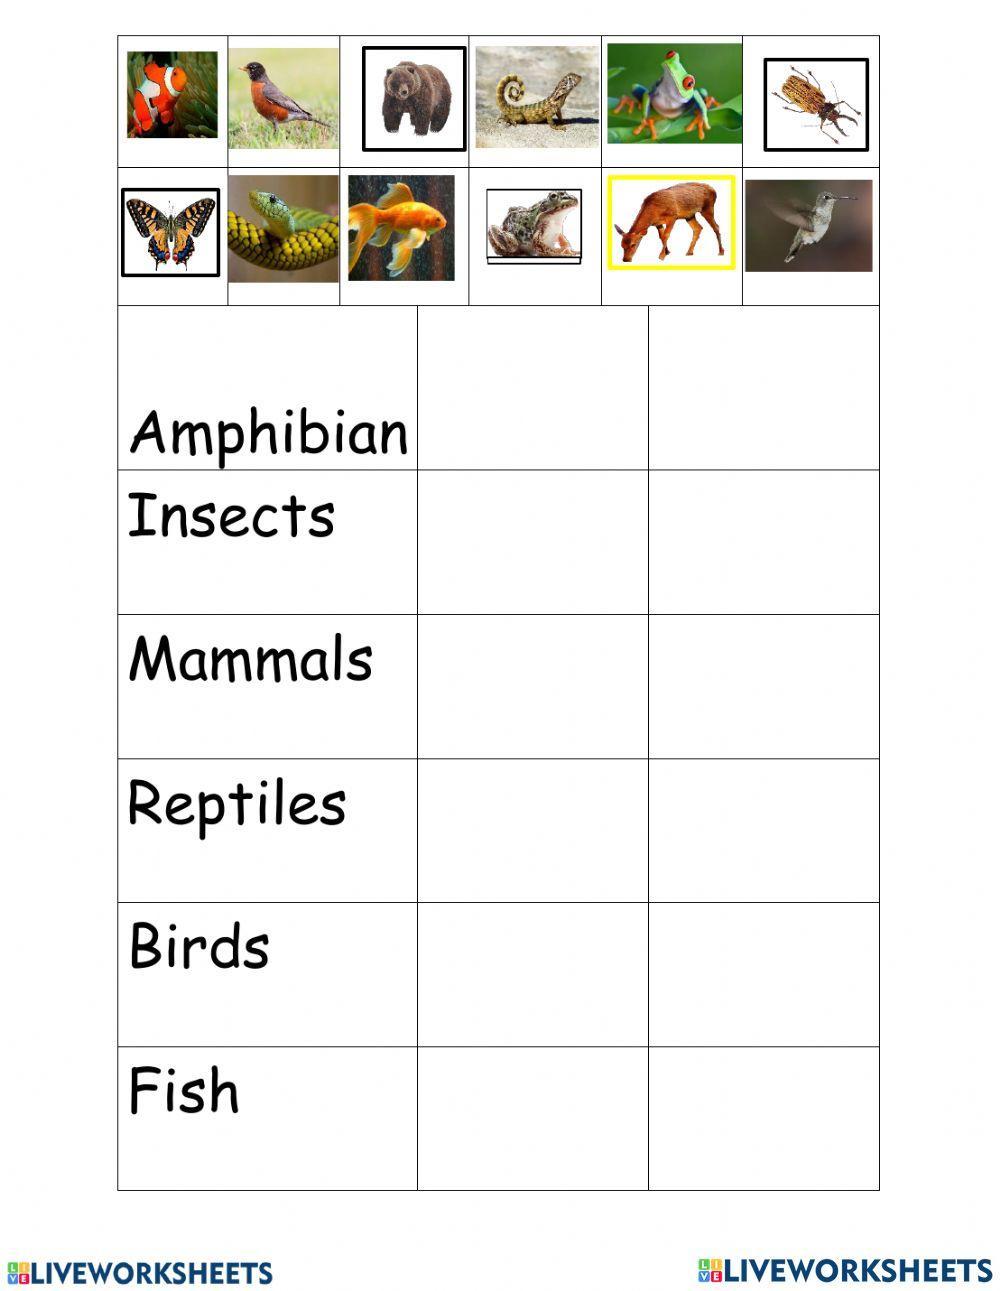 Animals groups